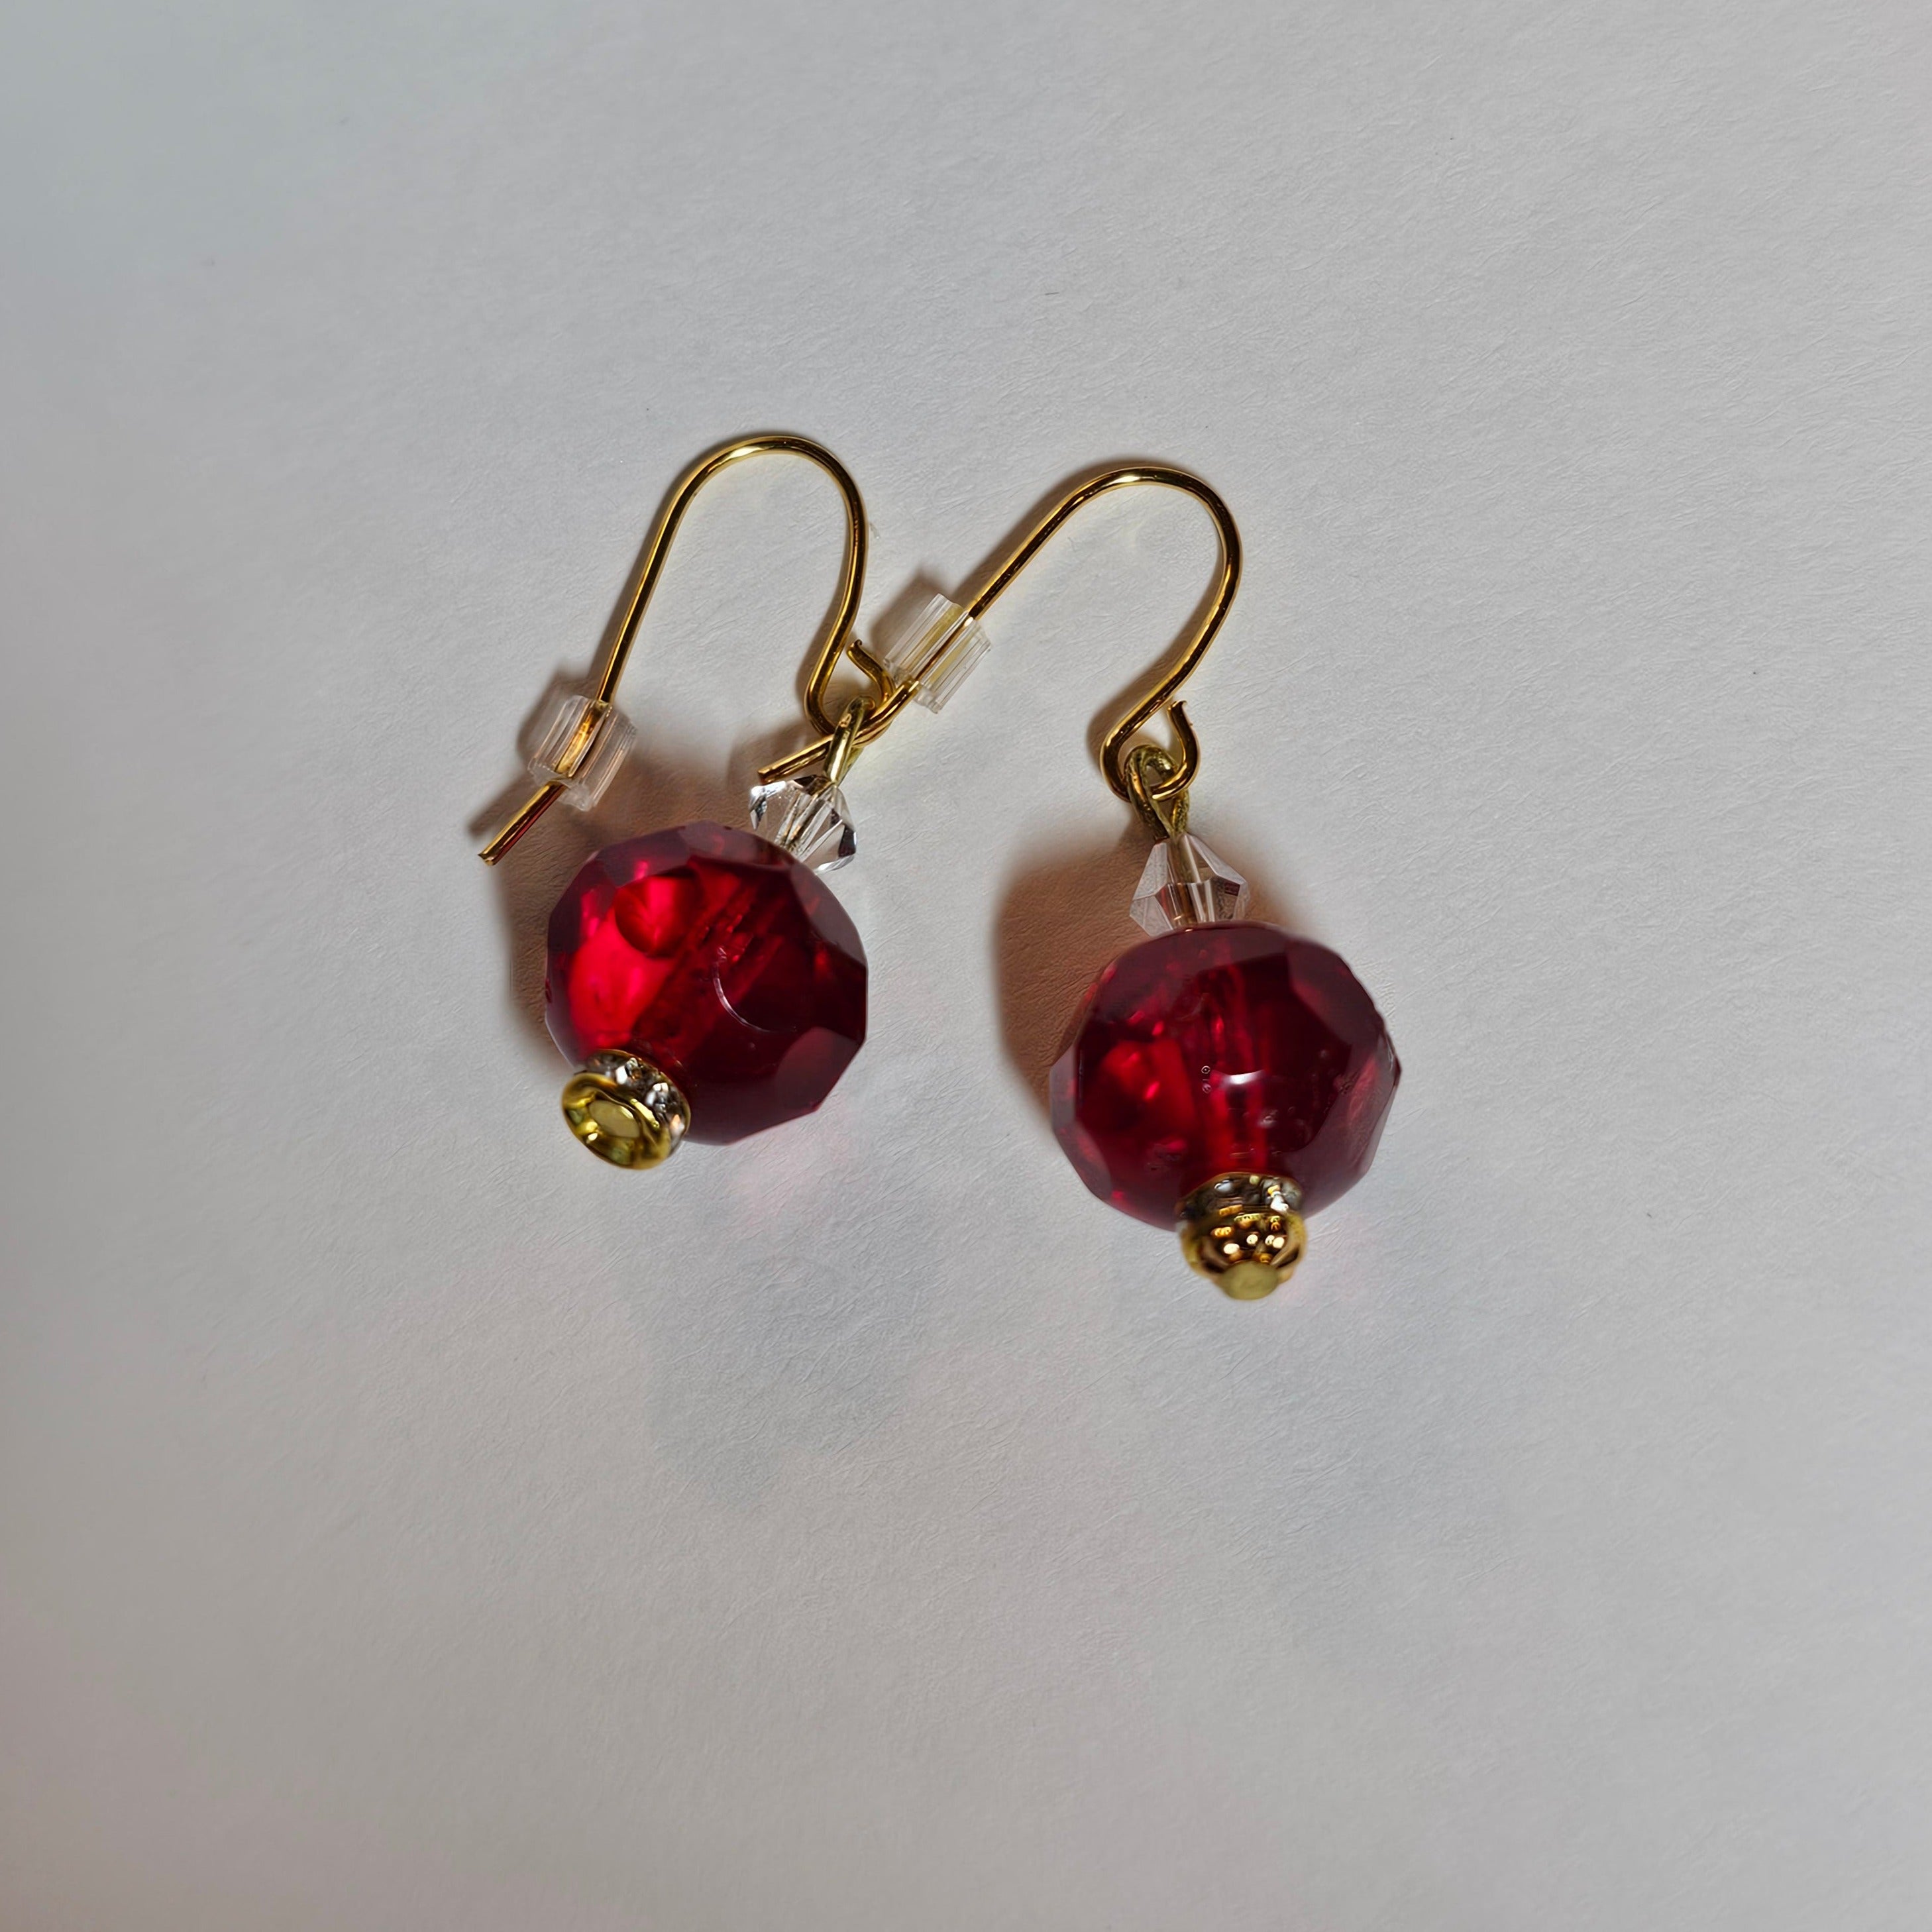 Vintage Austrian crystal and vintage glass drop earrings. 